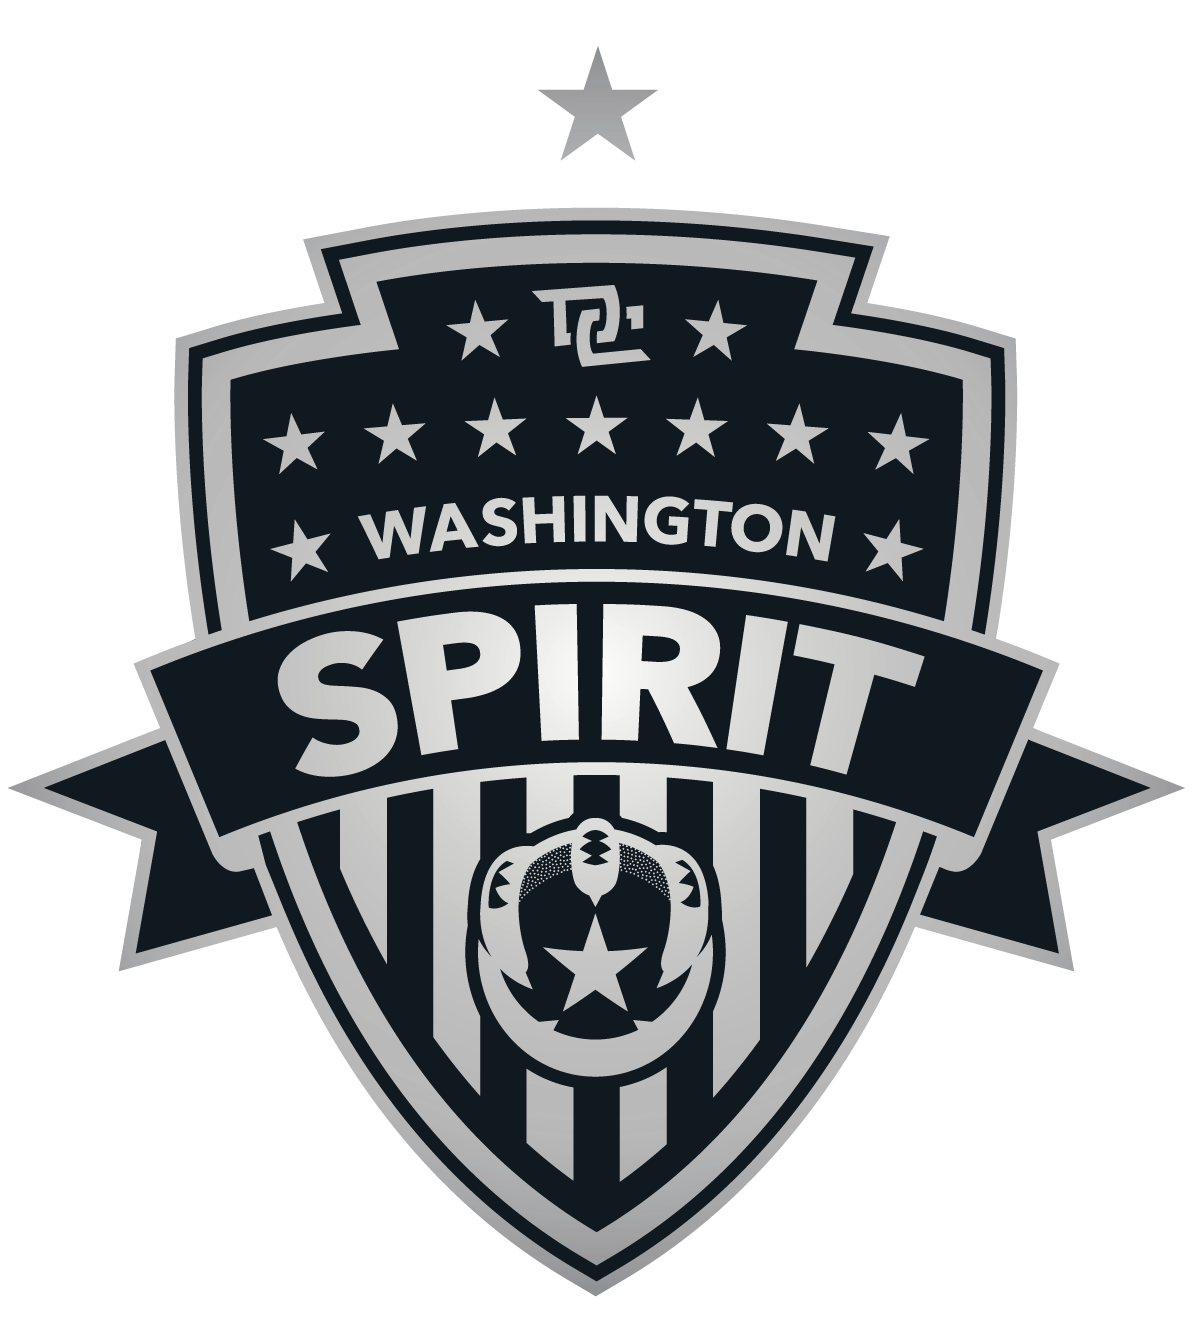 Washington Spirit chrome and black crest